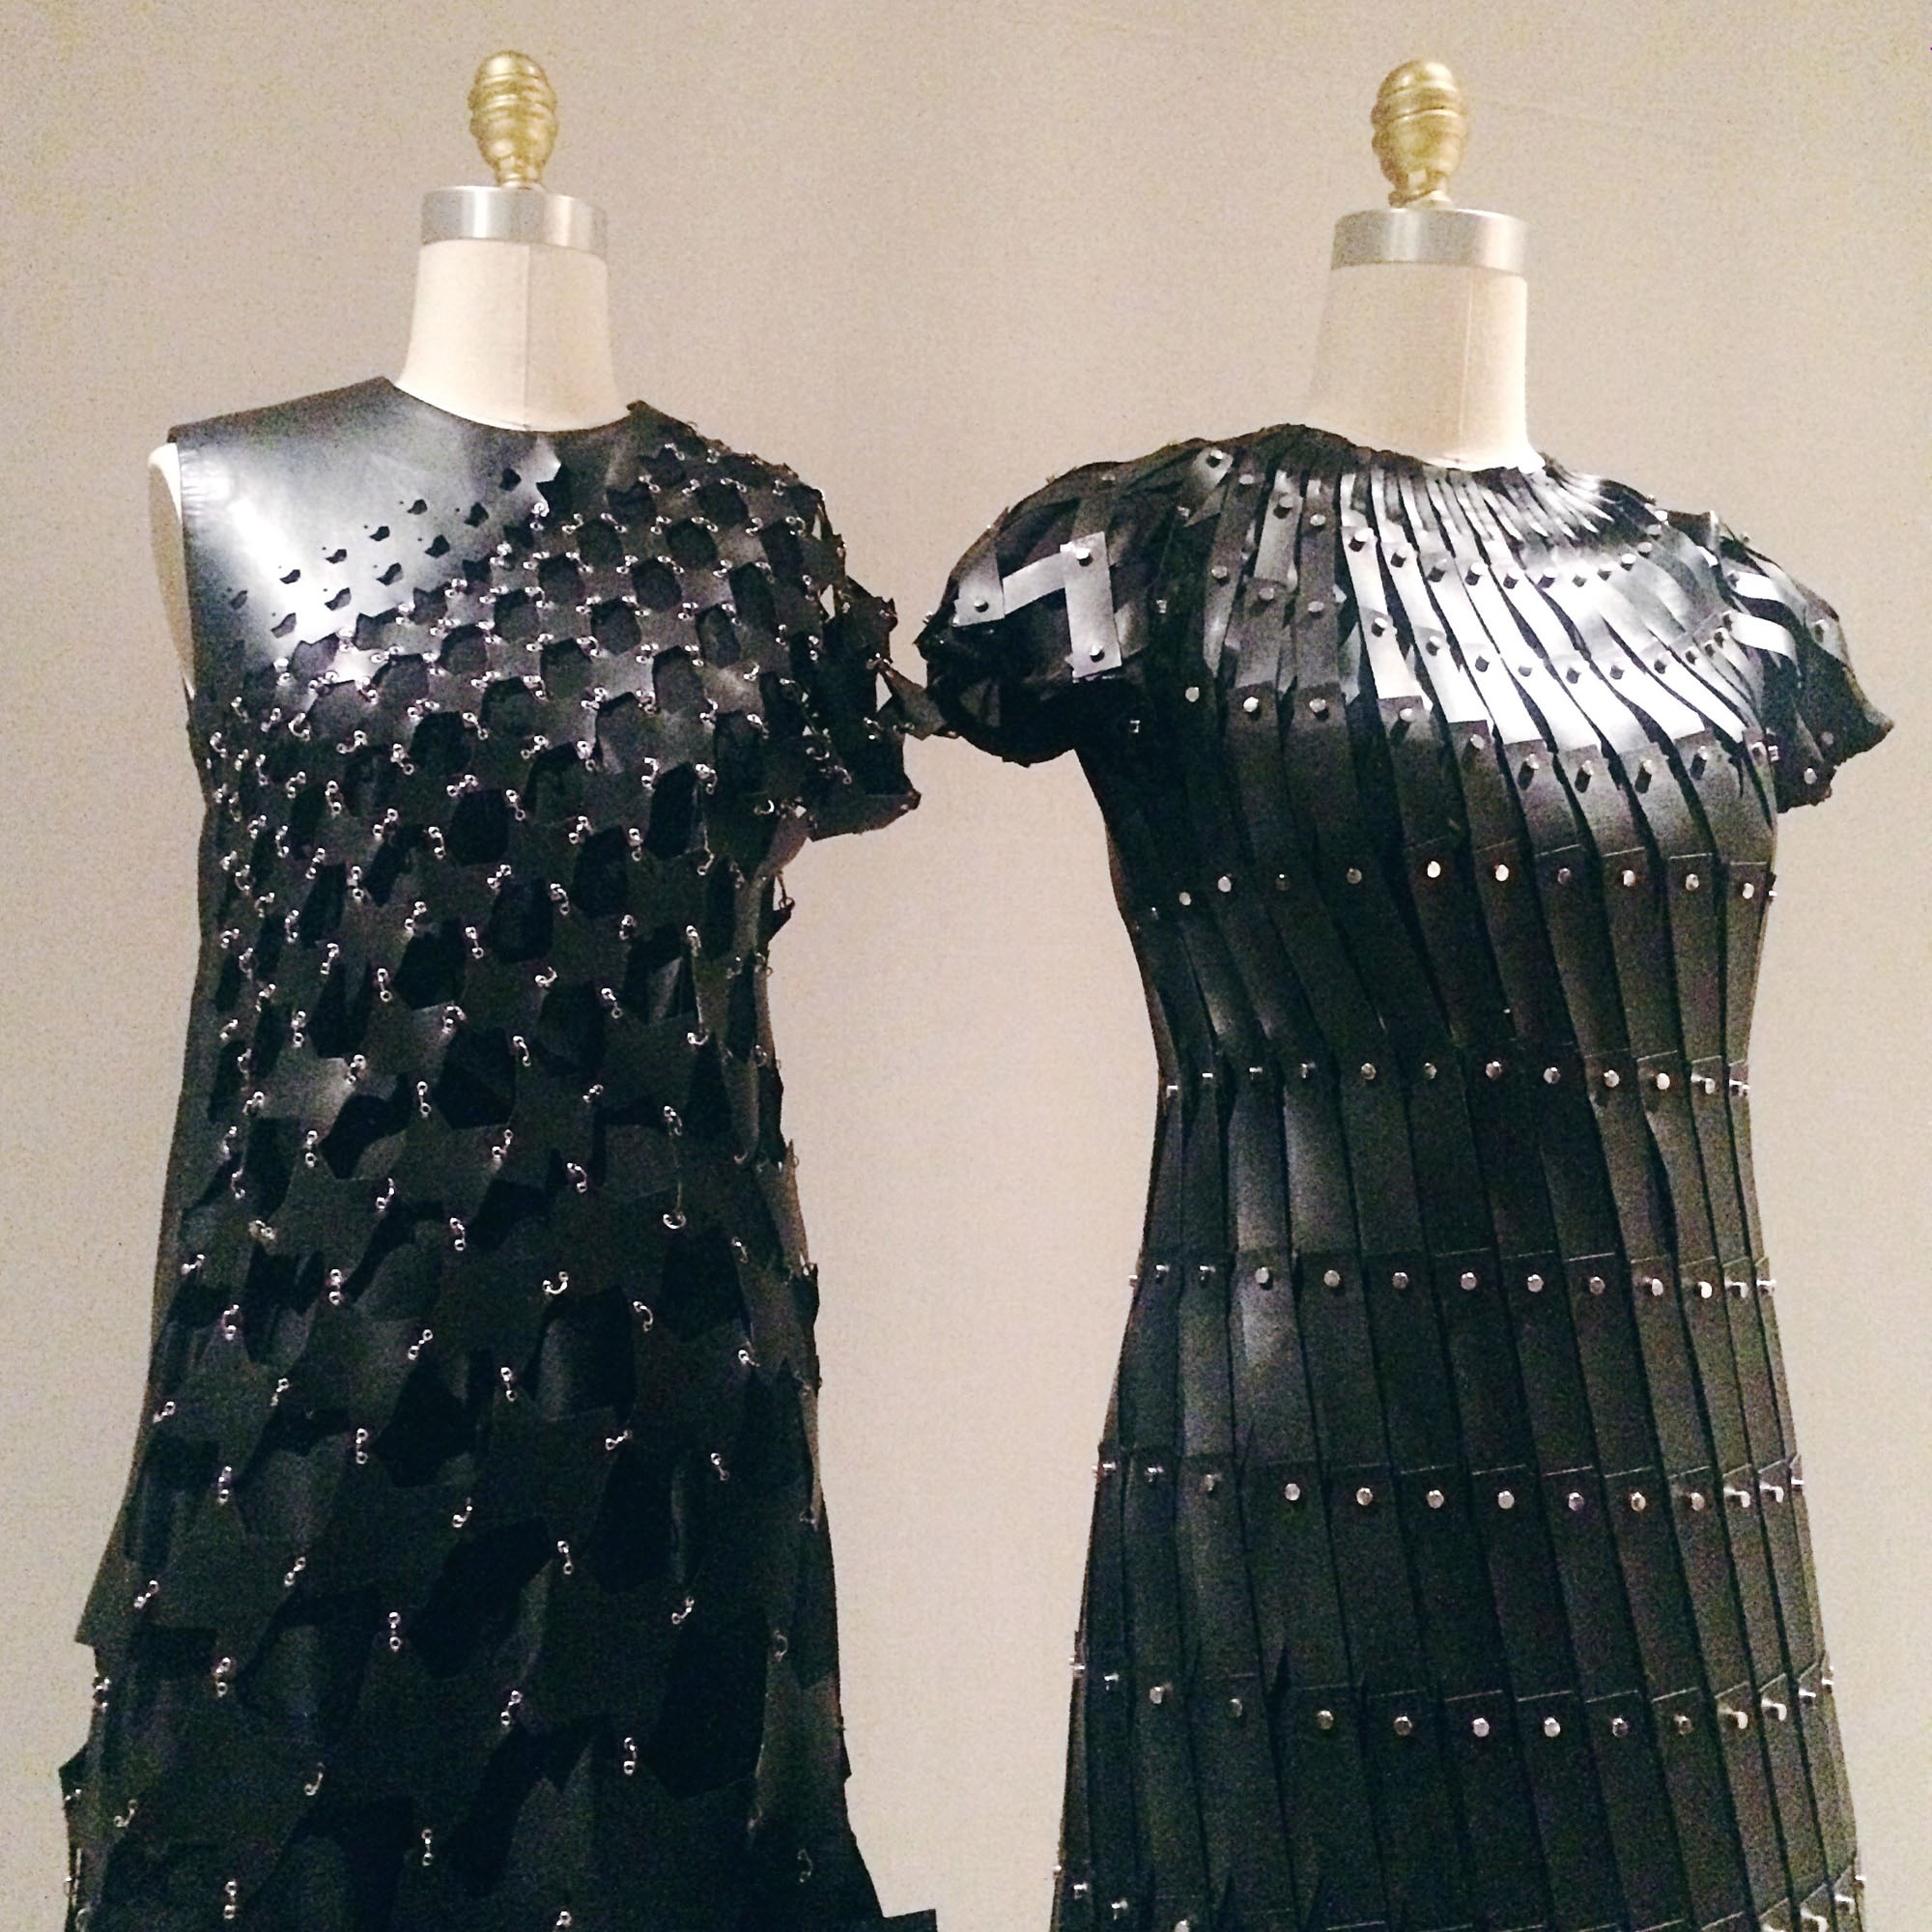 dresses by Rei Kawakubo Comme des Garcons on display at The Metropolitan Museum of Art in Manus x Machina2